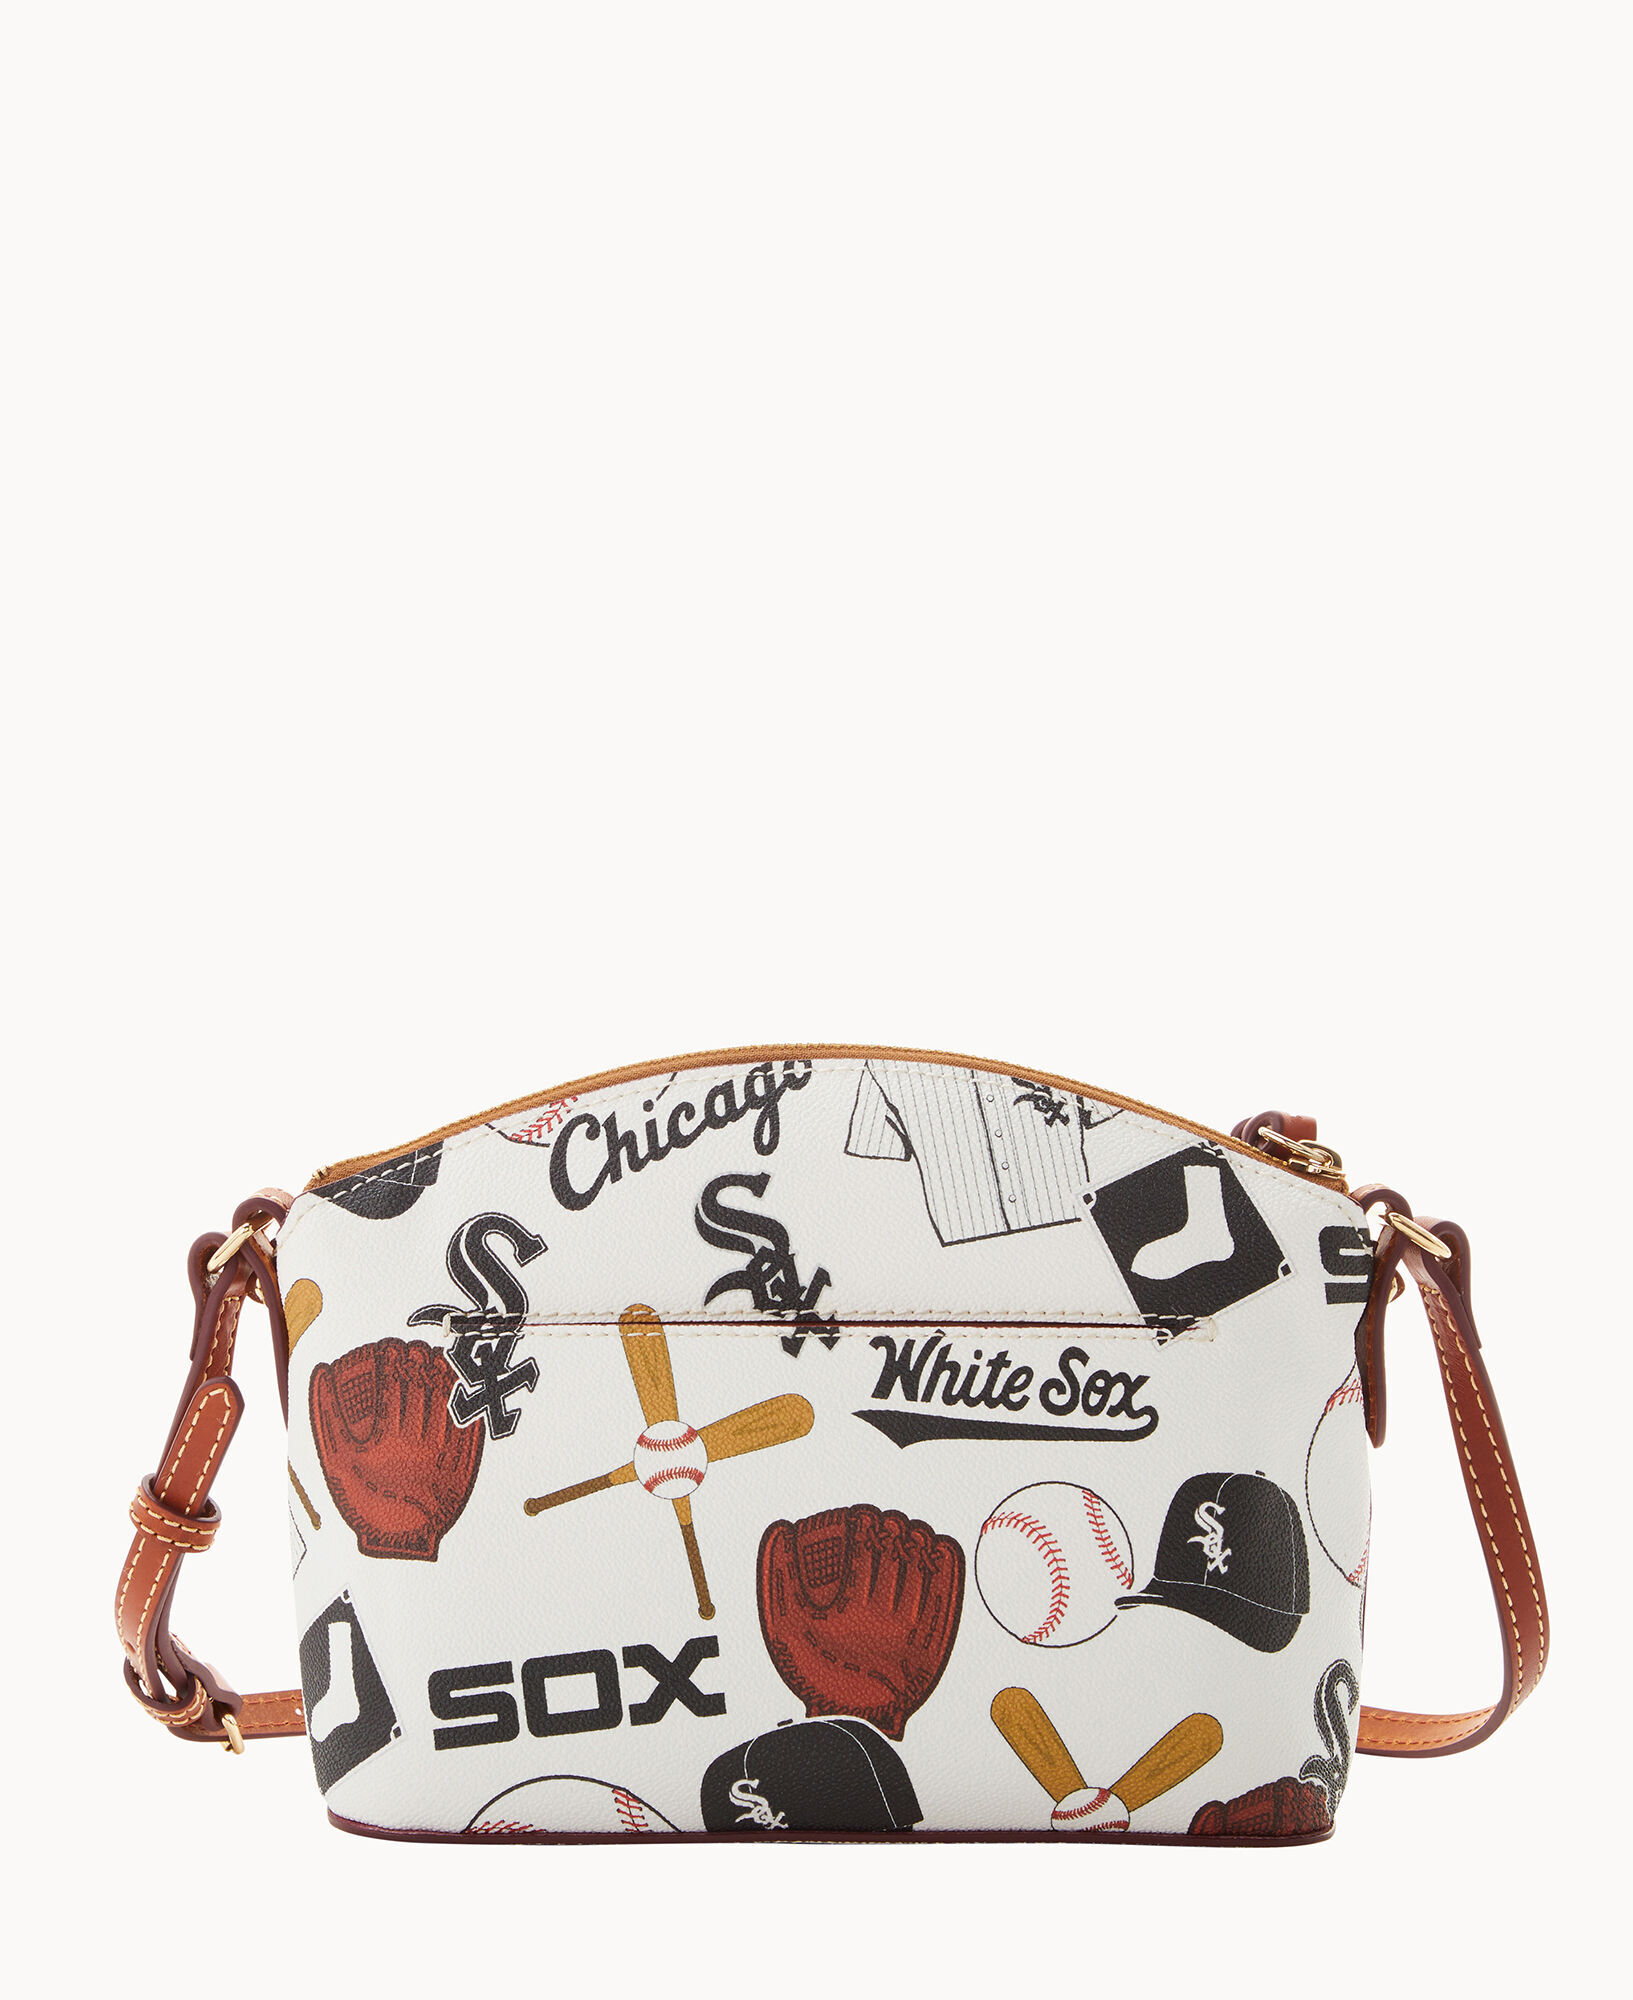 Dooney & Bourke MLB Boston Red Sox Suki Crossbody Shoulder Bag